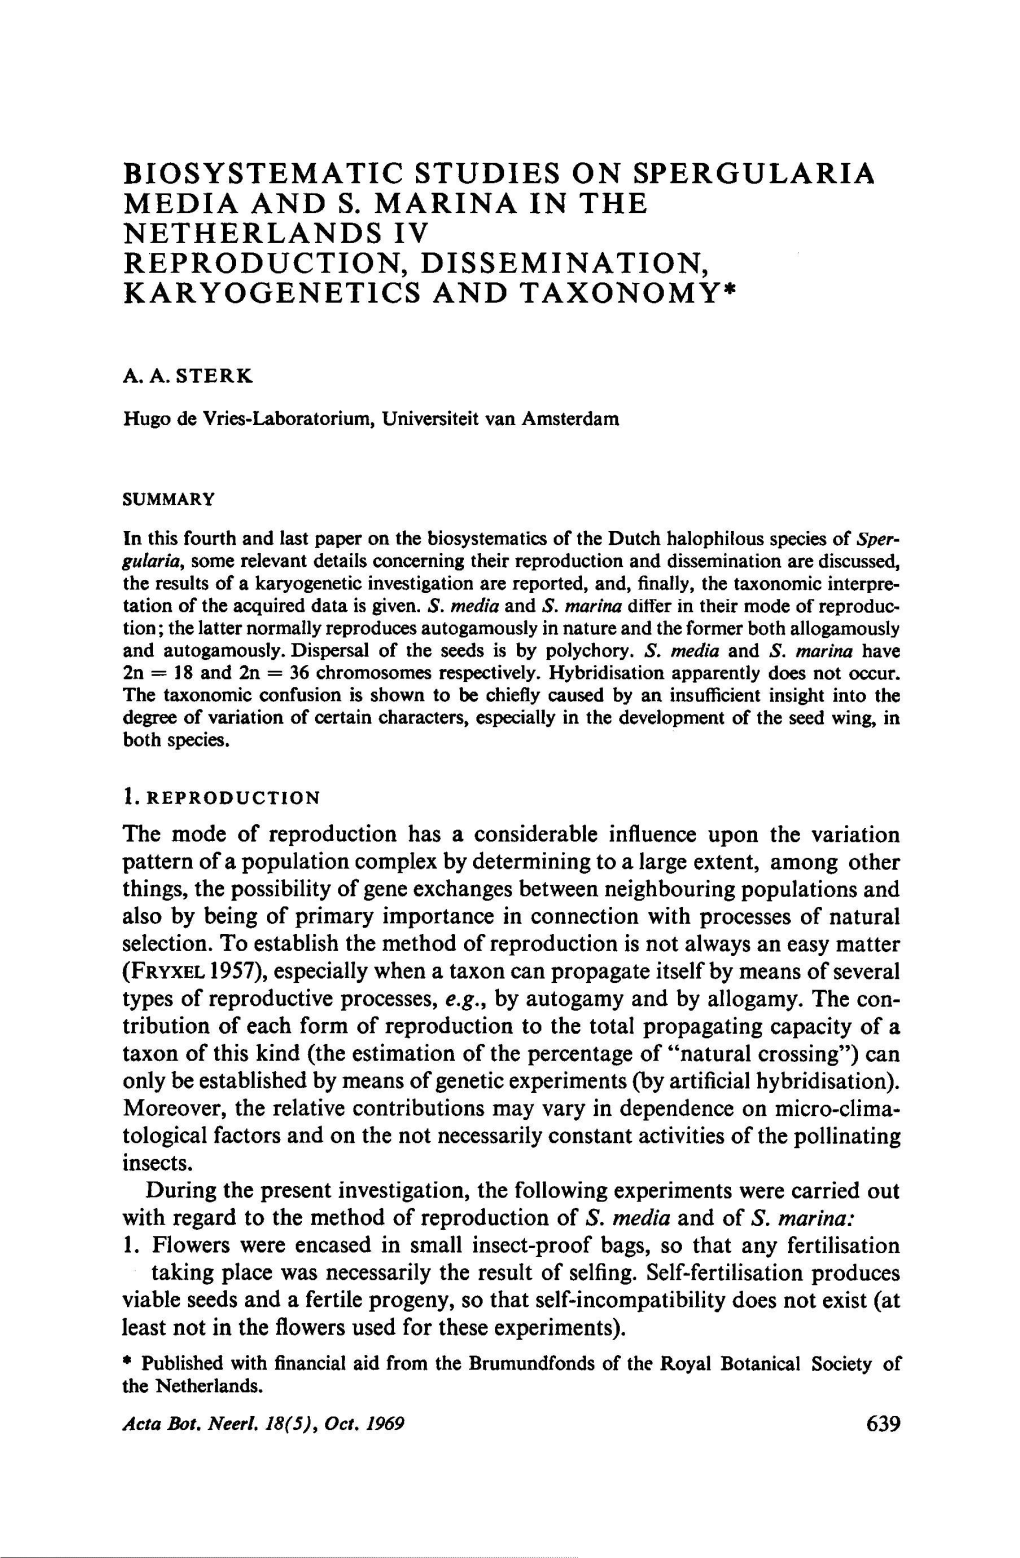 Biosystematic Studies on Spergularia Media S. Marina Netherlands IV. Reproduction, Dissemination, Karyogenetics and Taxonomy Re